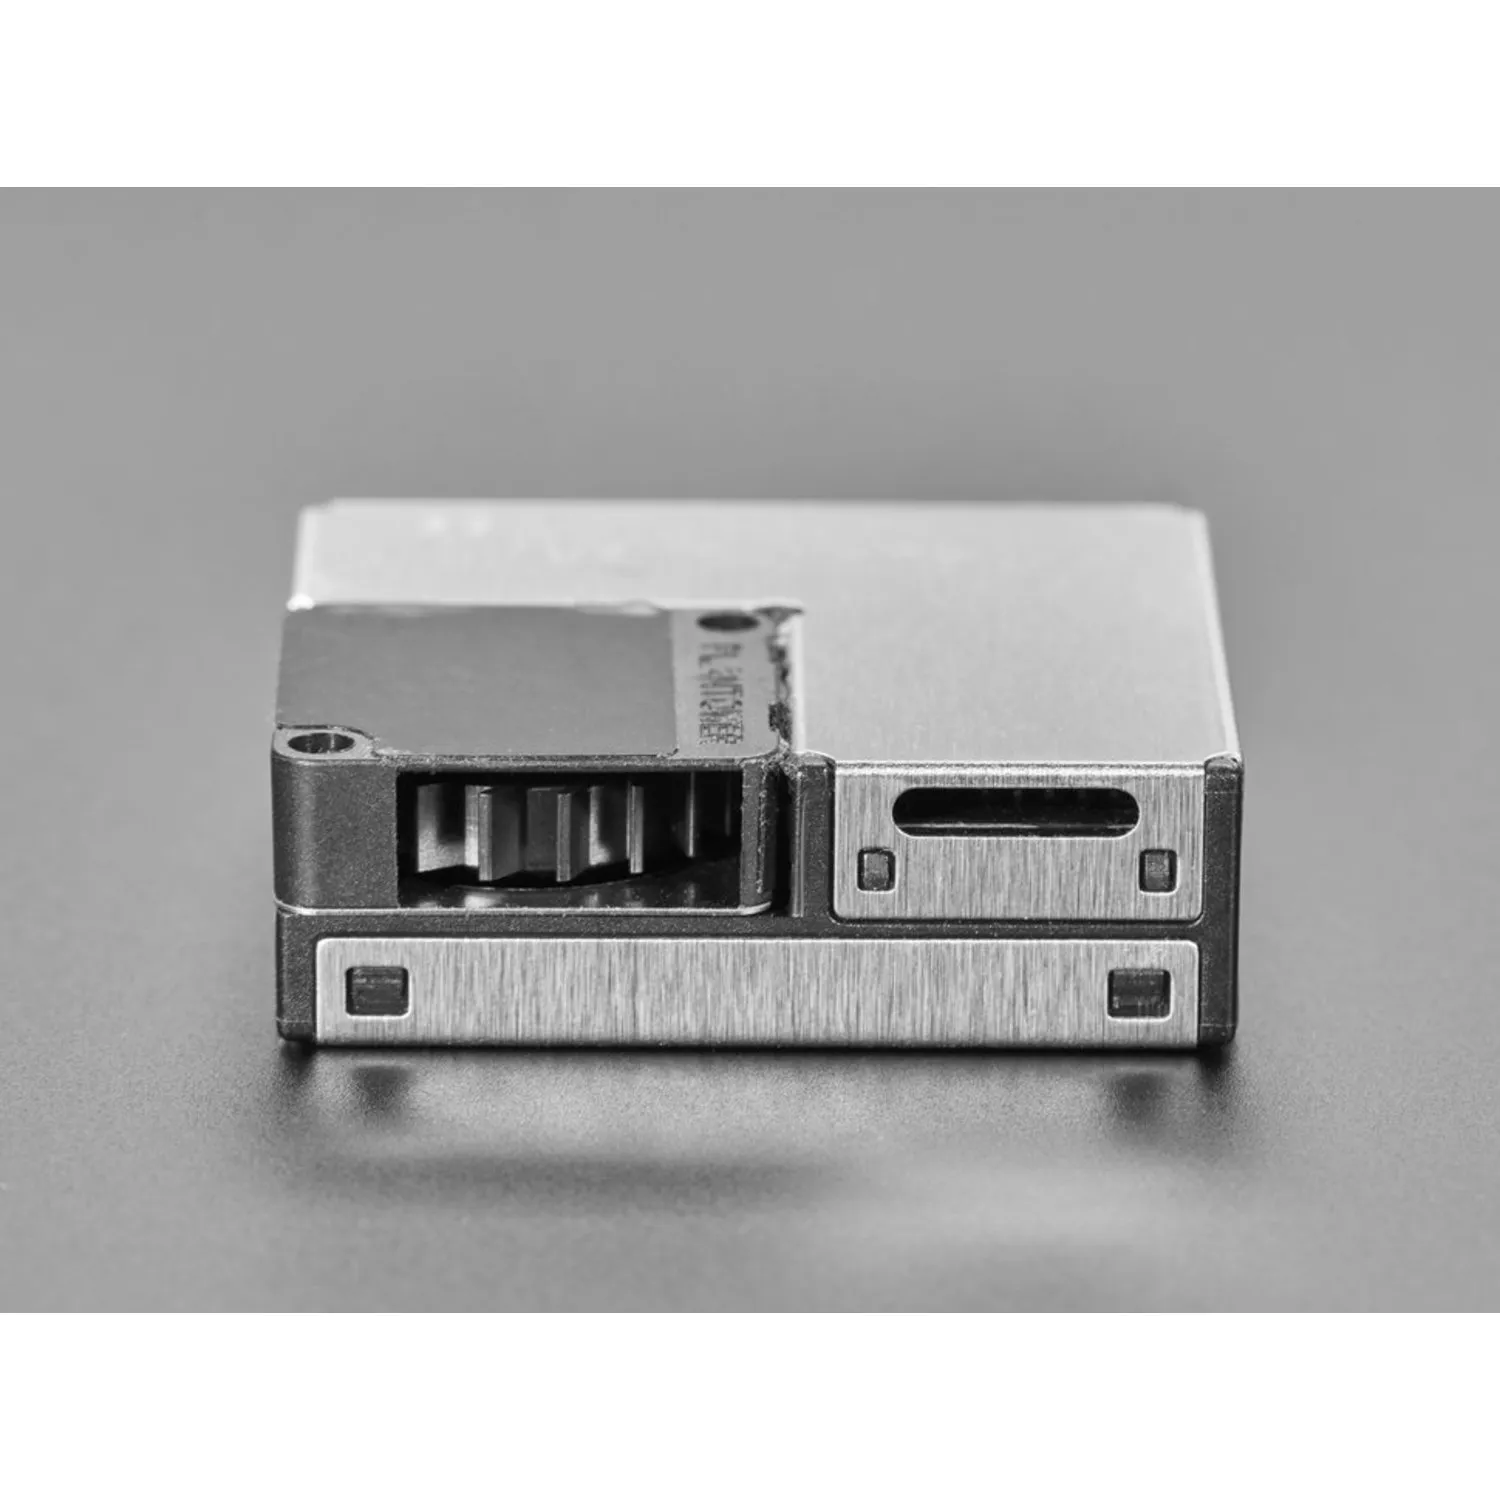 Photo of PM2.5 Air Quality Sensor with I2C Interface - PMSA003I